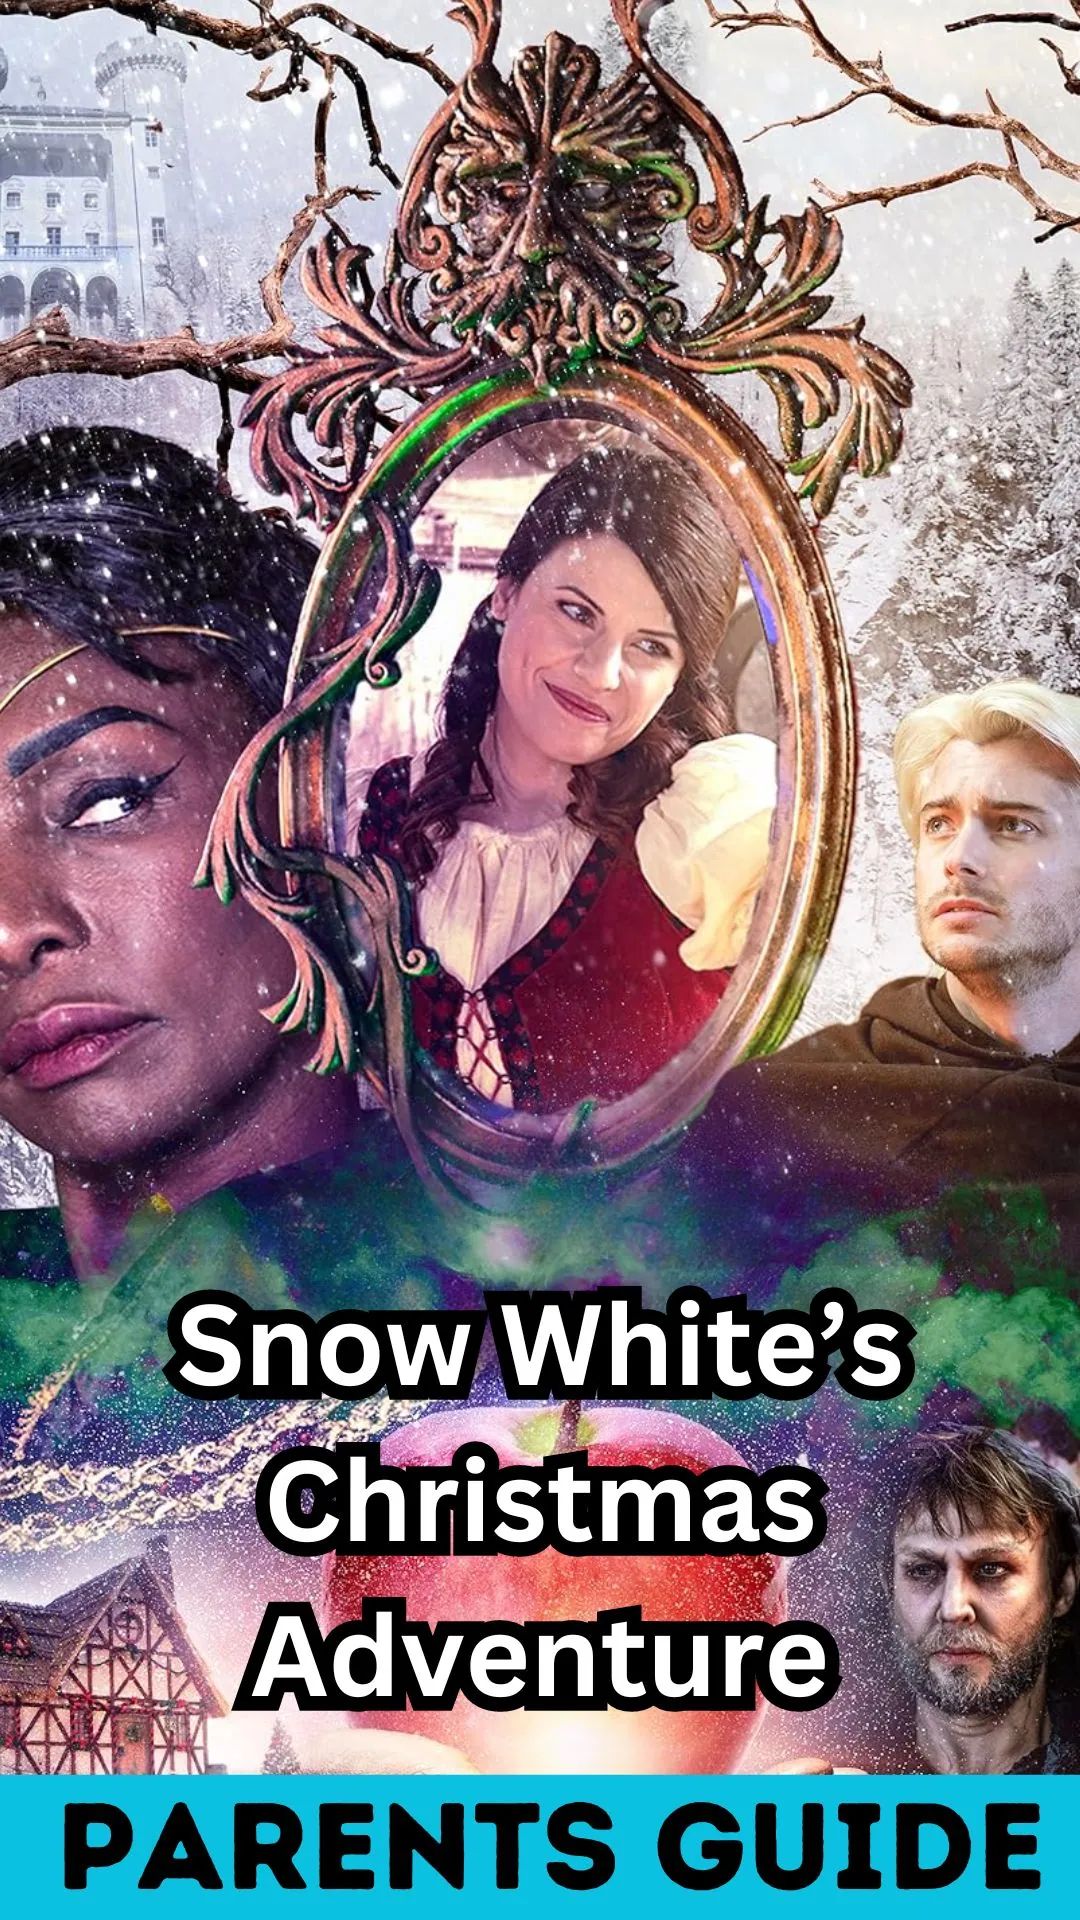 Snow White’s Christmas Adventure Parents Guide (1)